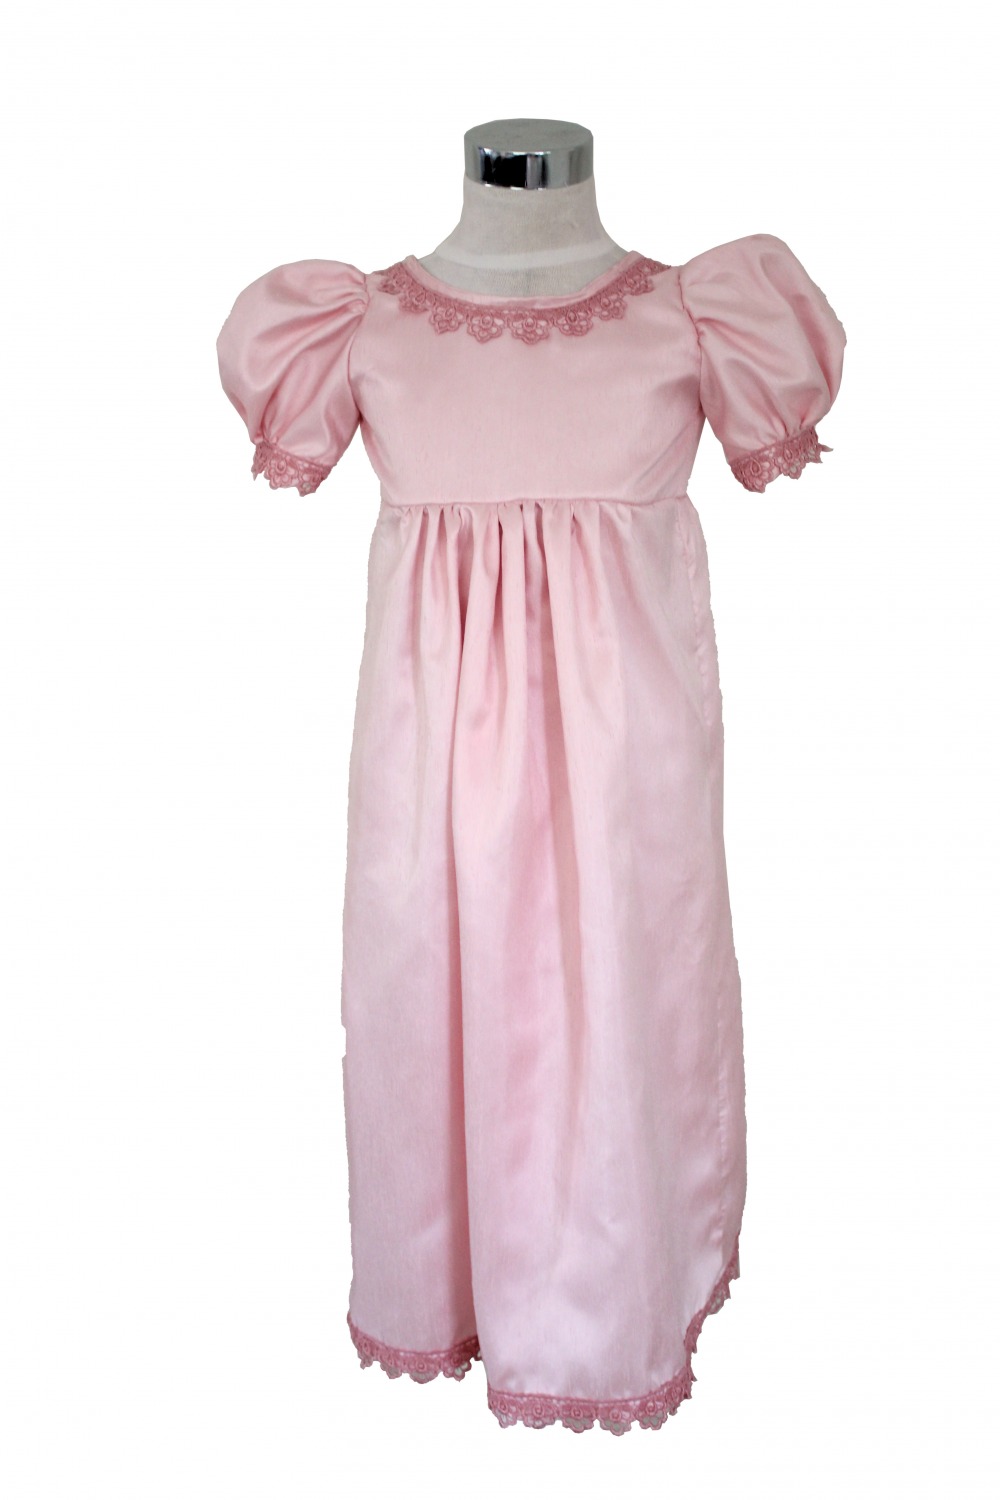 Girl's Regency Jane Austen Costume Age 4 Years  Image